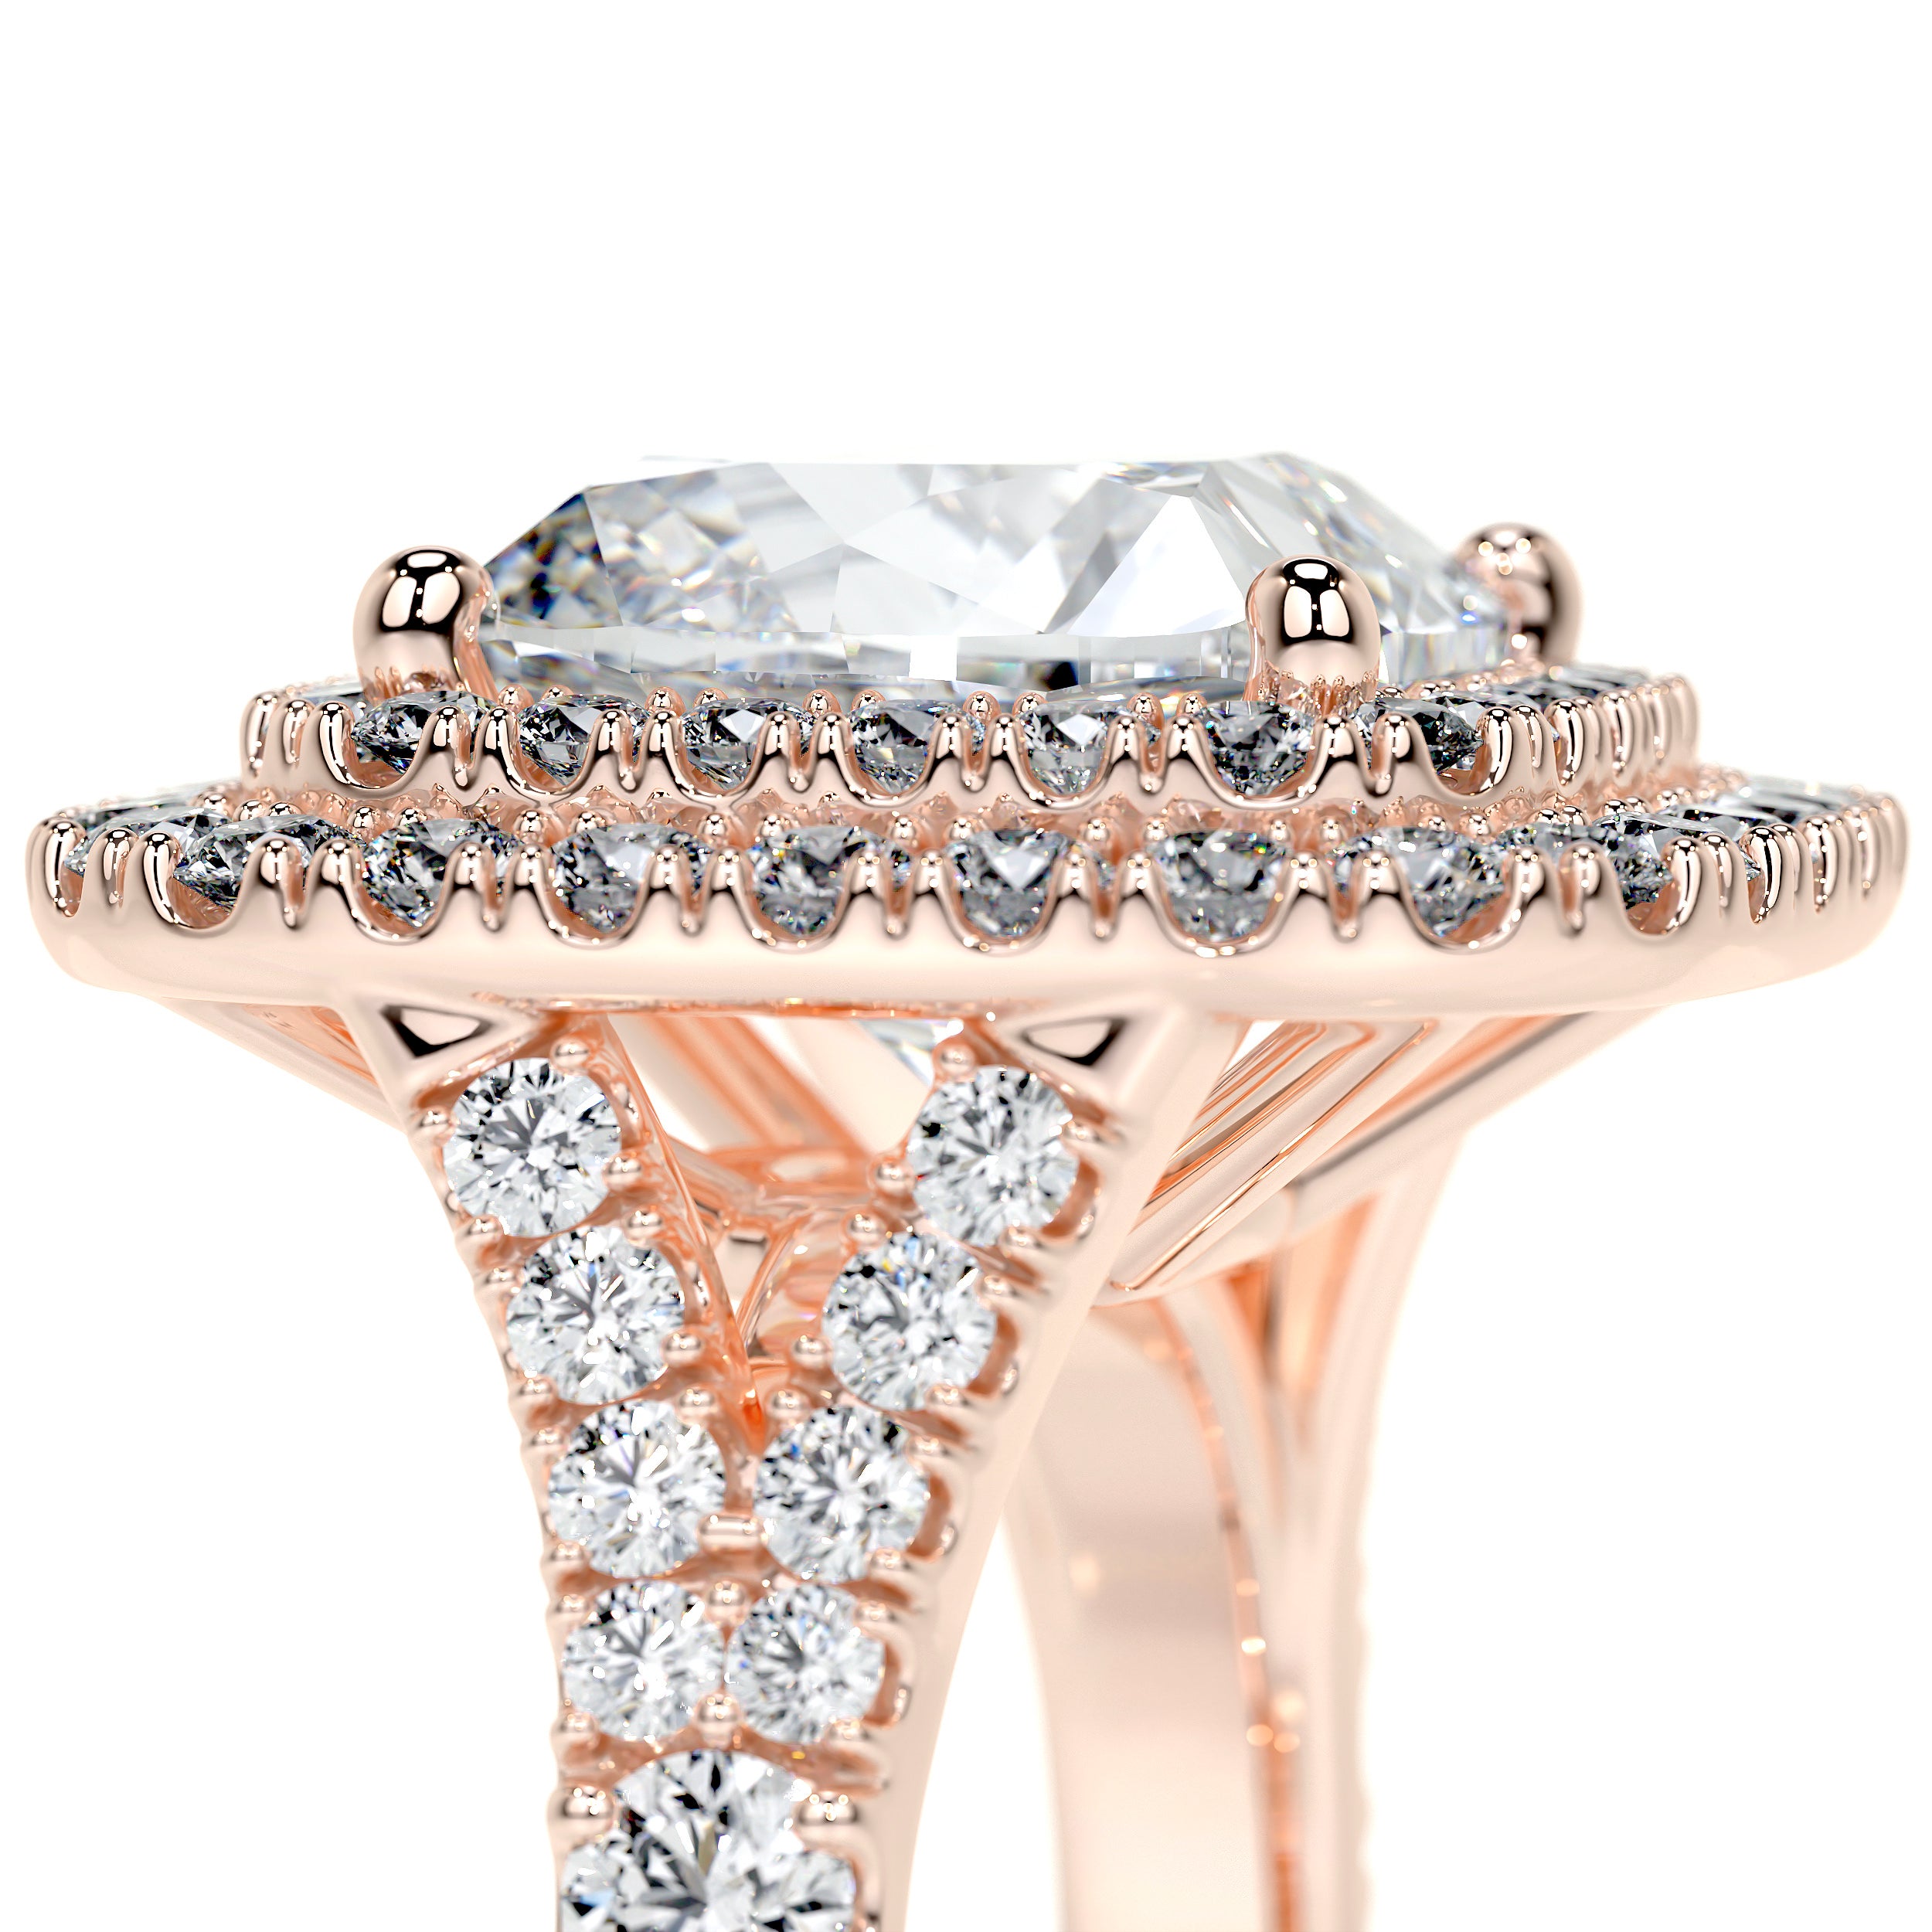 Marley Diamond Engagement Ring - 14K Rose Gold